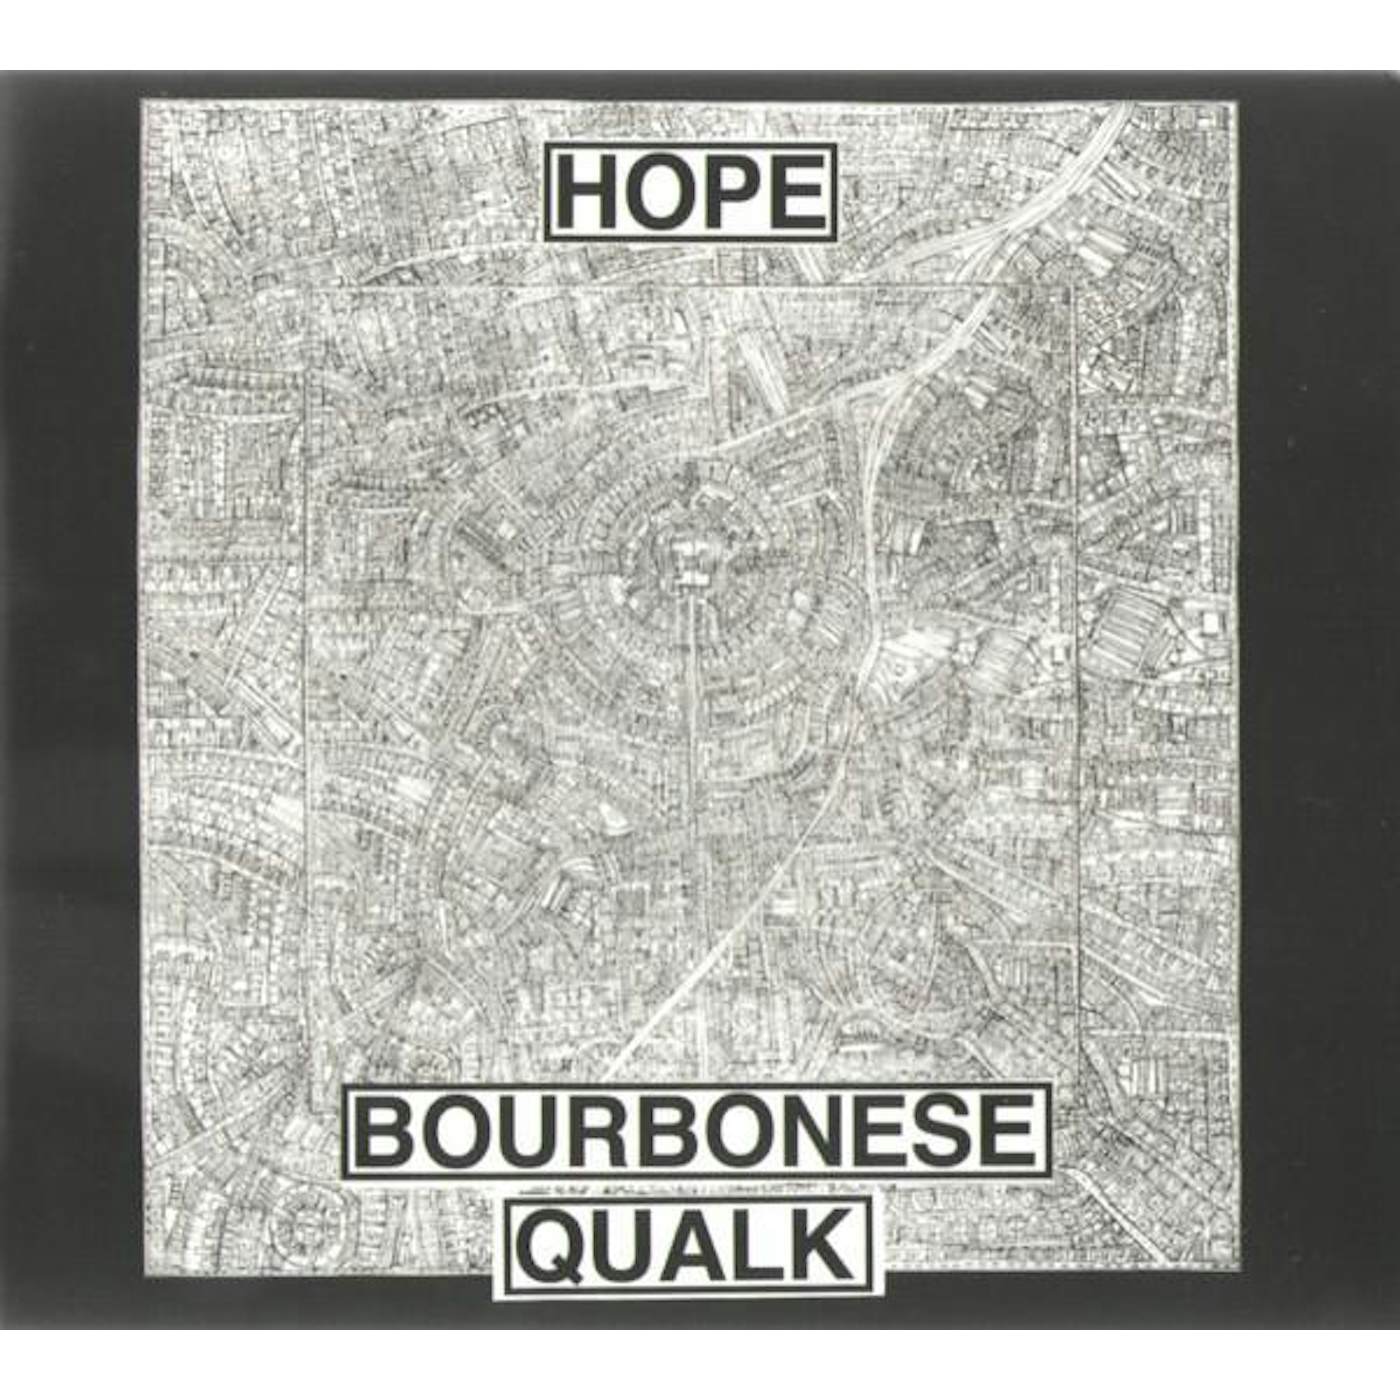 Bourbonese Qualk HOPE CD